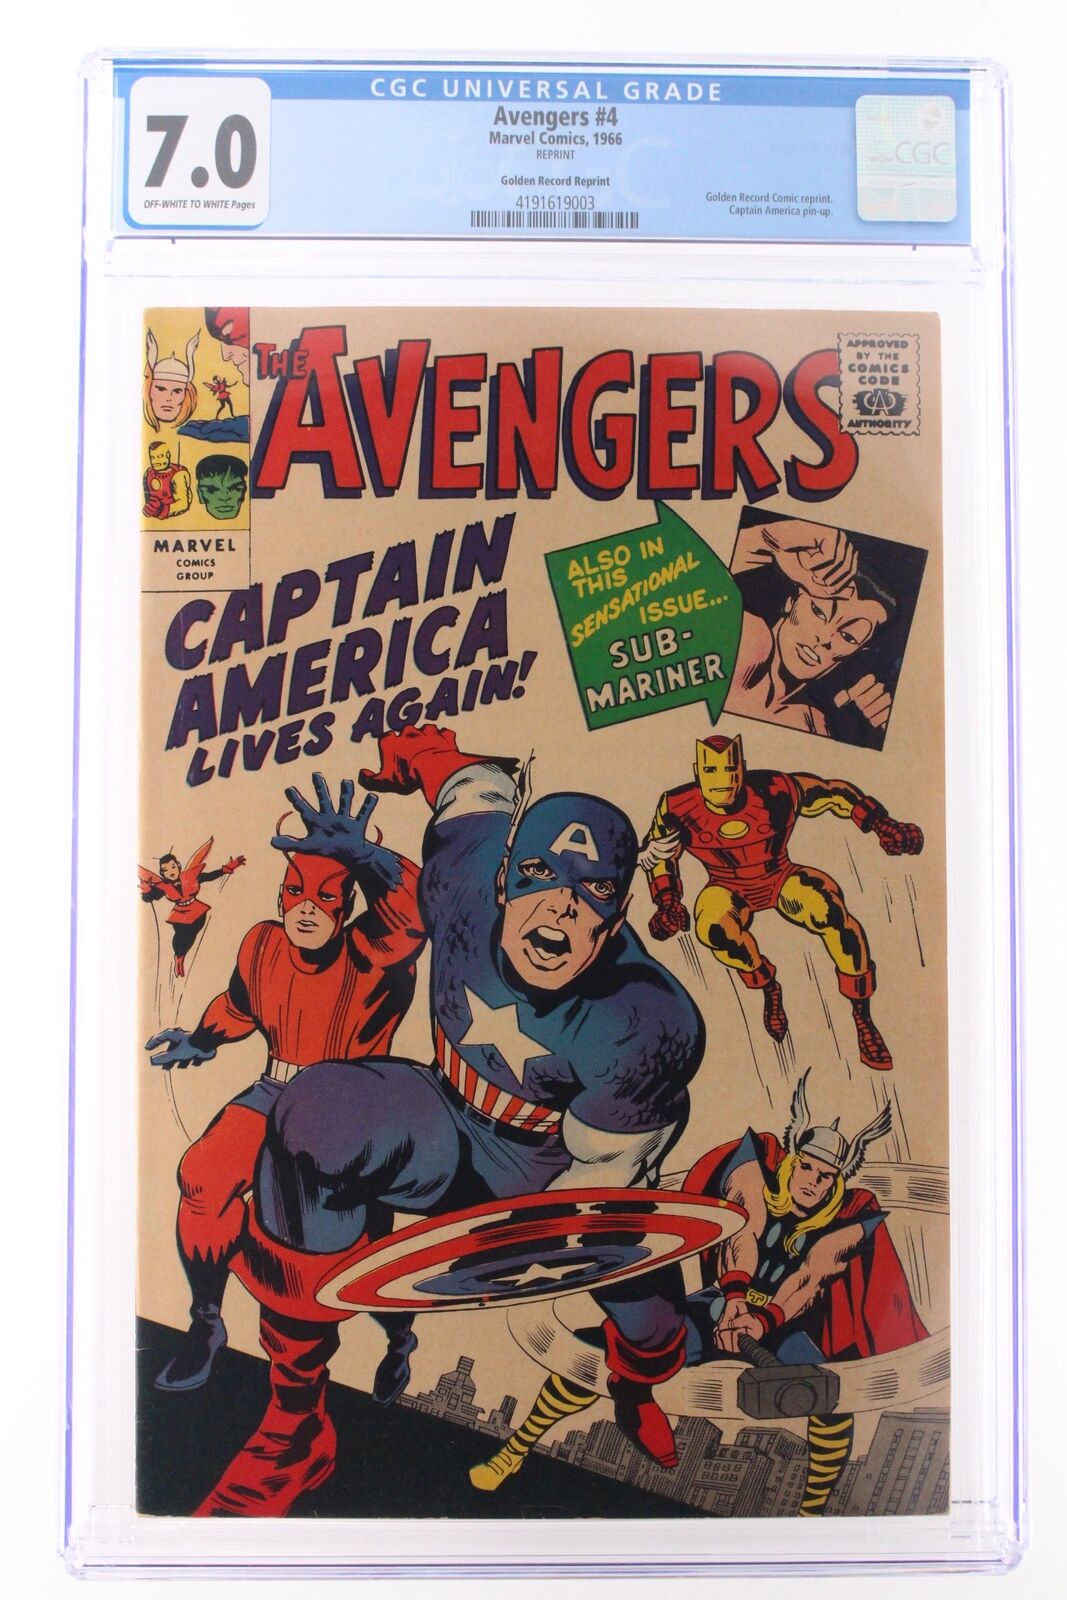 Avengers #4 - Marvel 1966 CGC 7.0 Golden Record Comic reprint. Captain America p